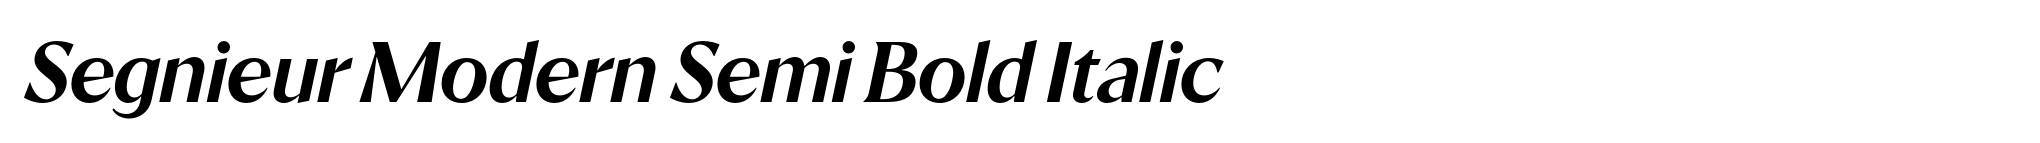 Segnieur Modern Semi Bold Italic image